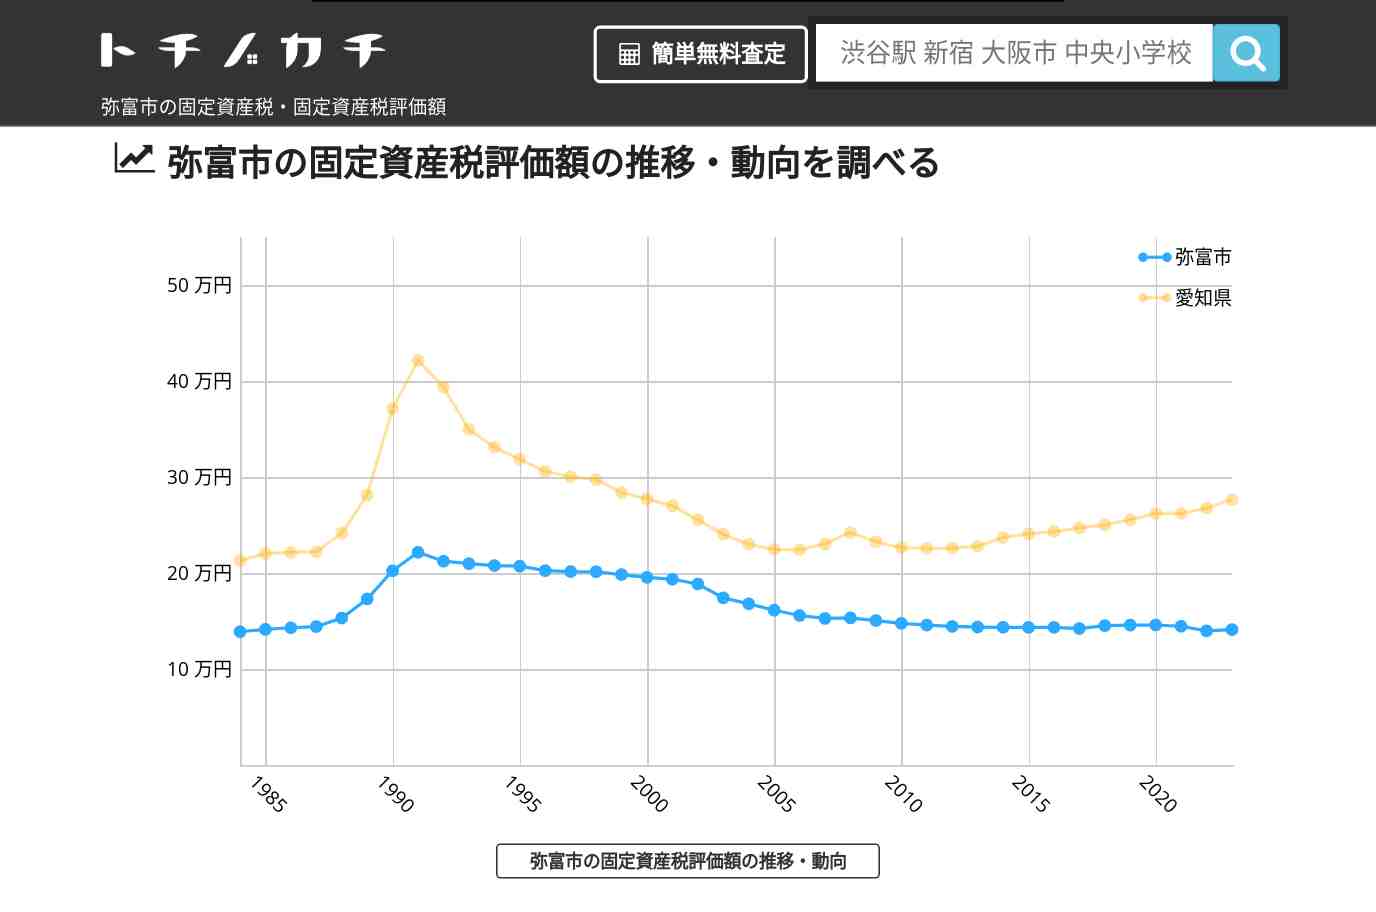 白鳥小学校(愛知県 弥富市)周辺の固定資産税・固定資産税評価額 | トチノカチ